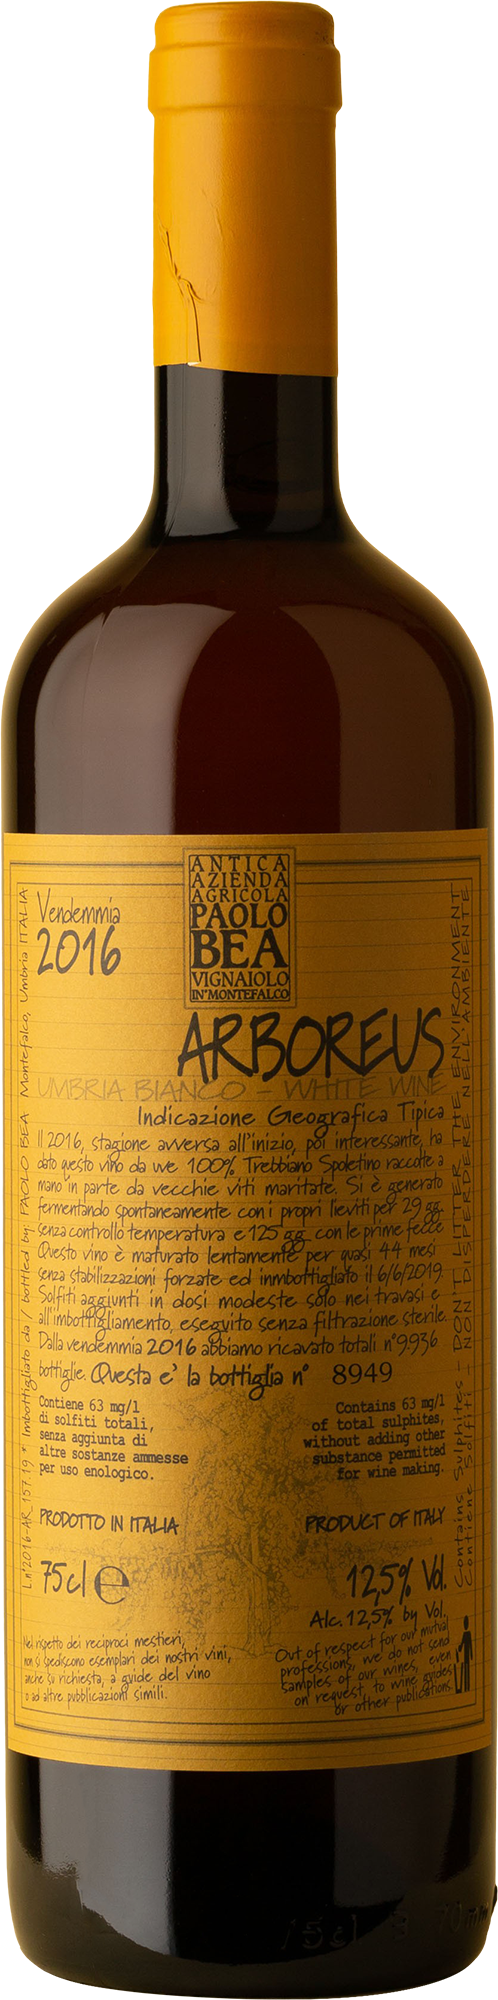 Paolo Bea - Arboreus Trebbiano Spoletino 2016 Orange Wine